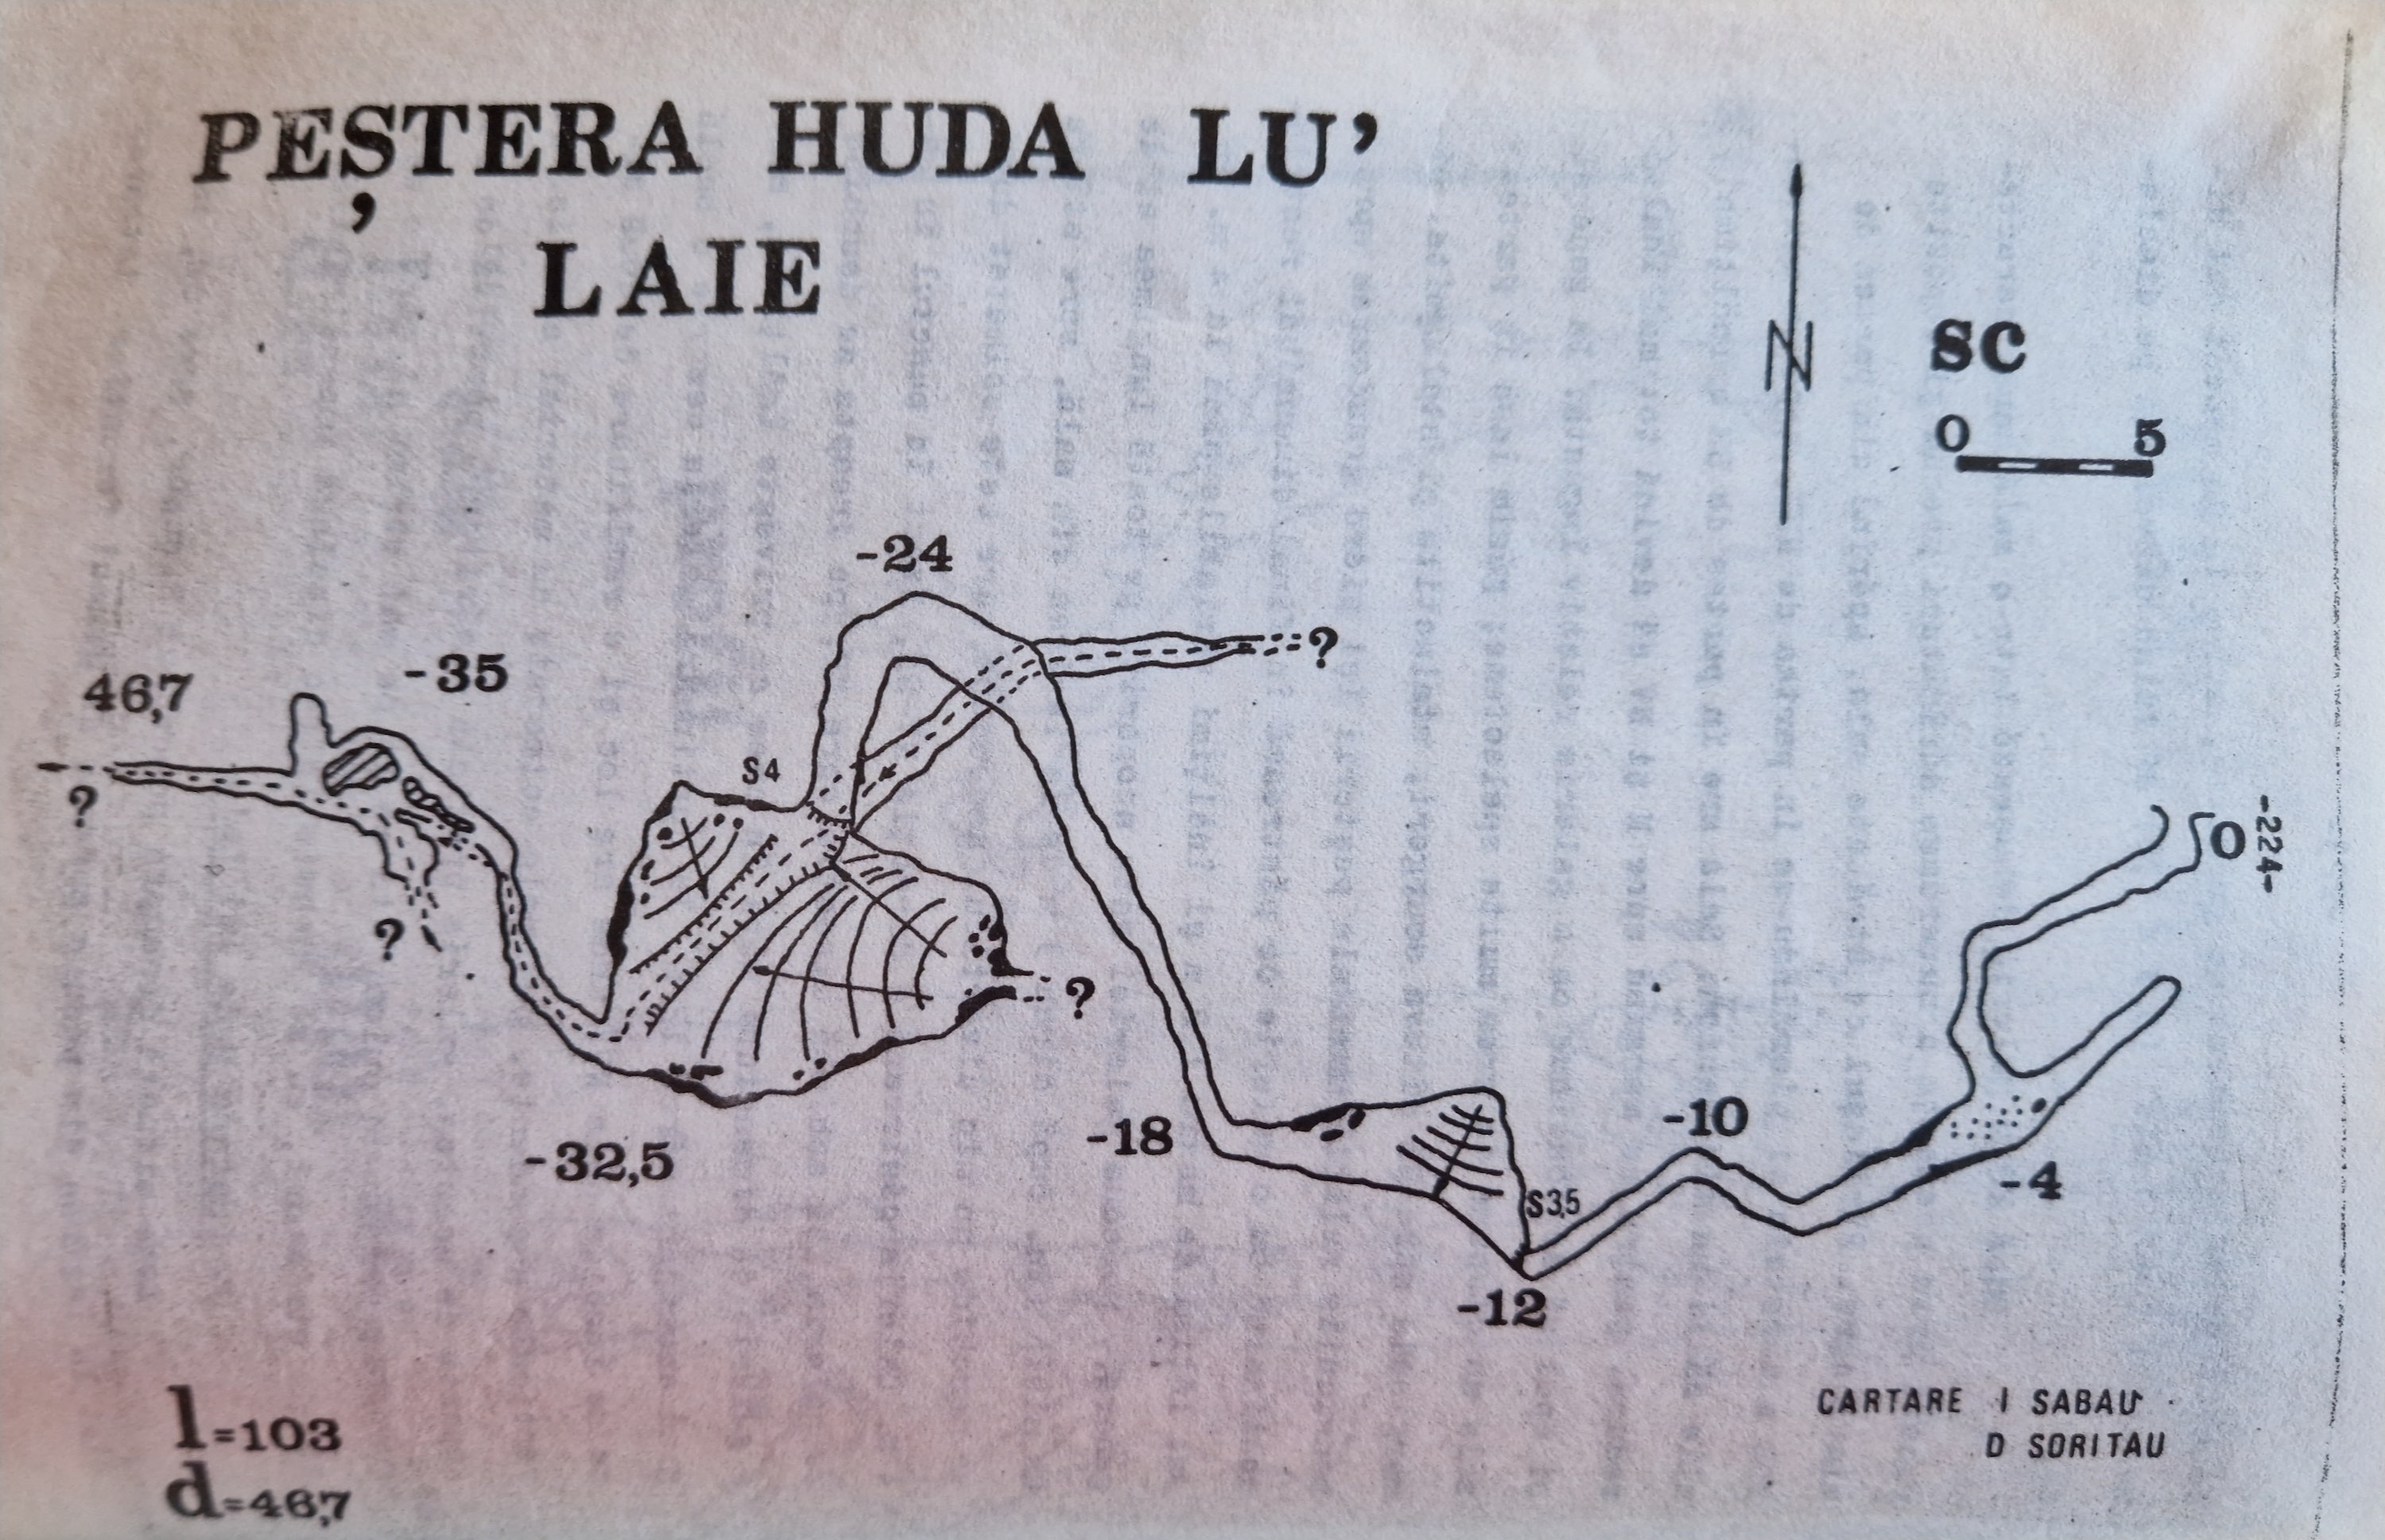 Harta - Pestera Huda lu' Laie - Sabau, Soritau - 1986